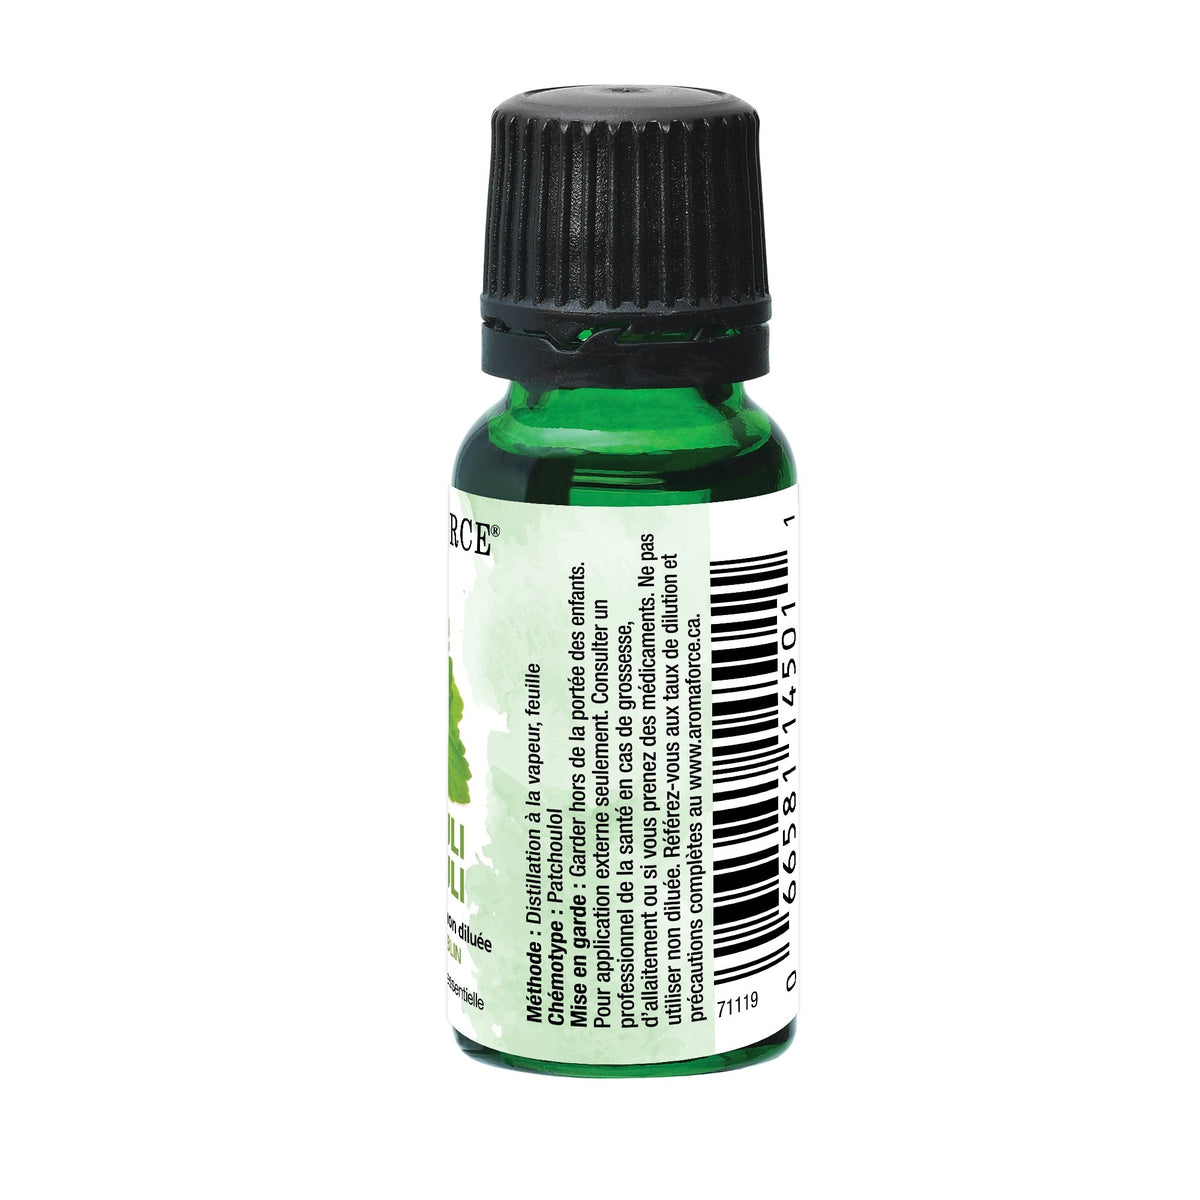 Aromaforce Patchouli Essential Oil 15mL - A.Vogel Canada